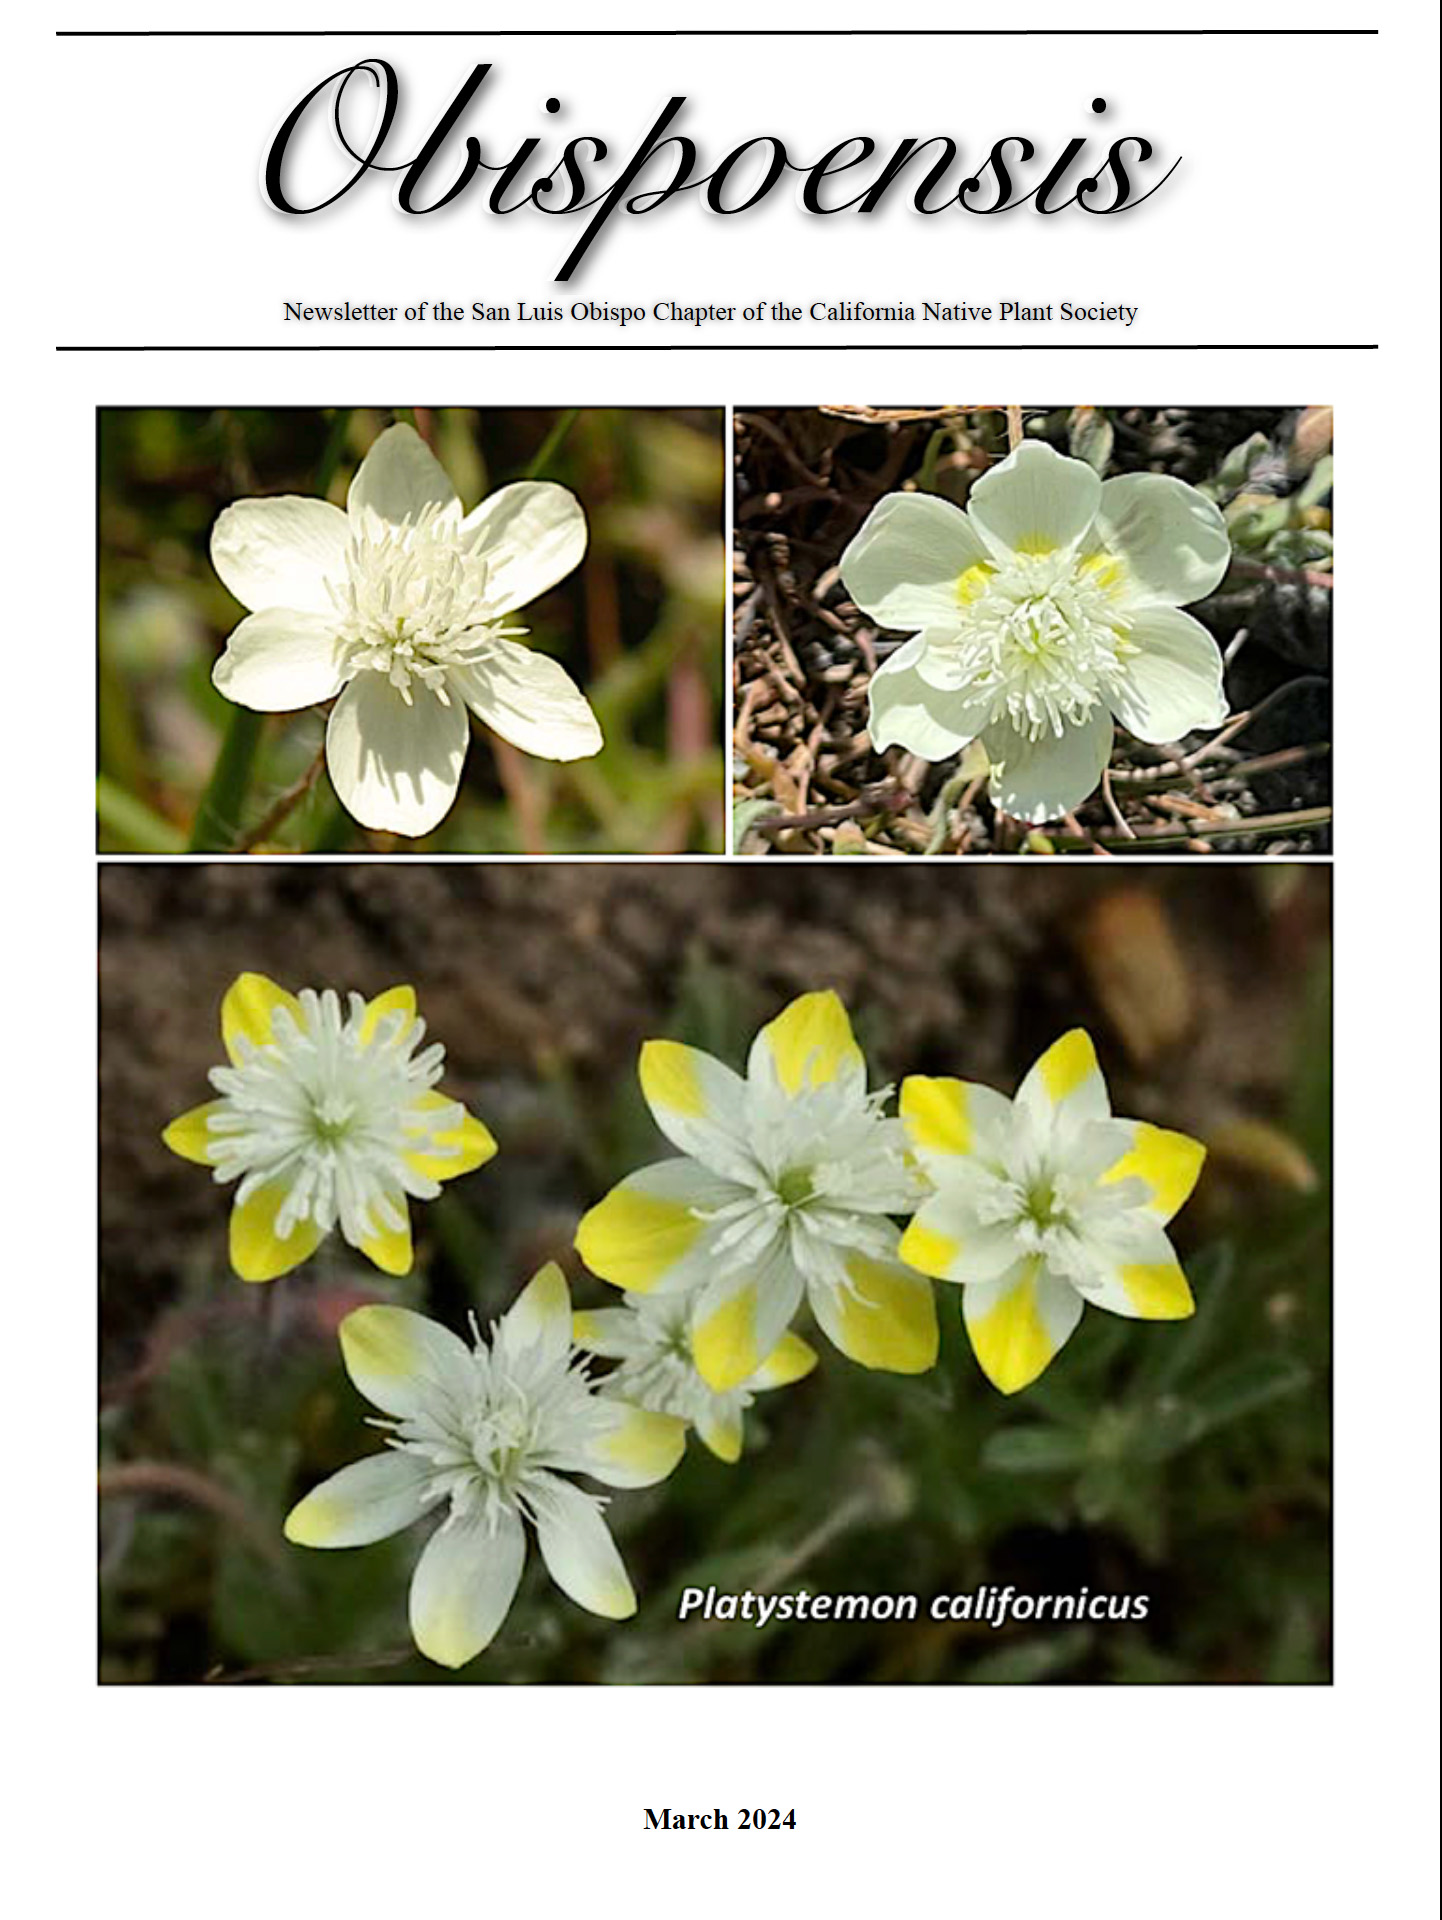 Obispoensis Newsletter March 2024 California Native Plant Society San Luis Obispo